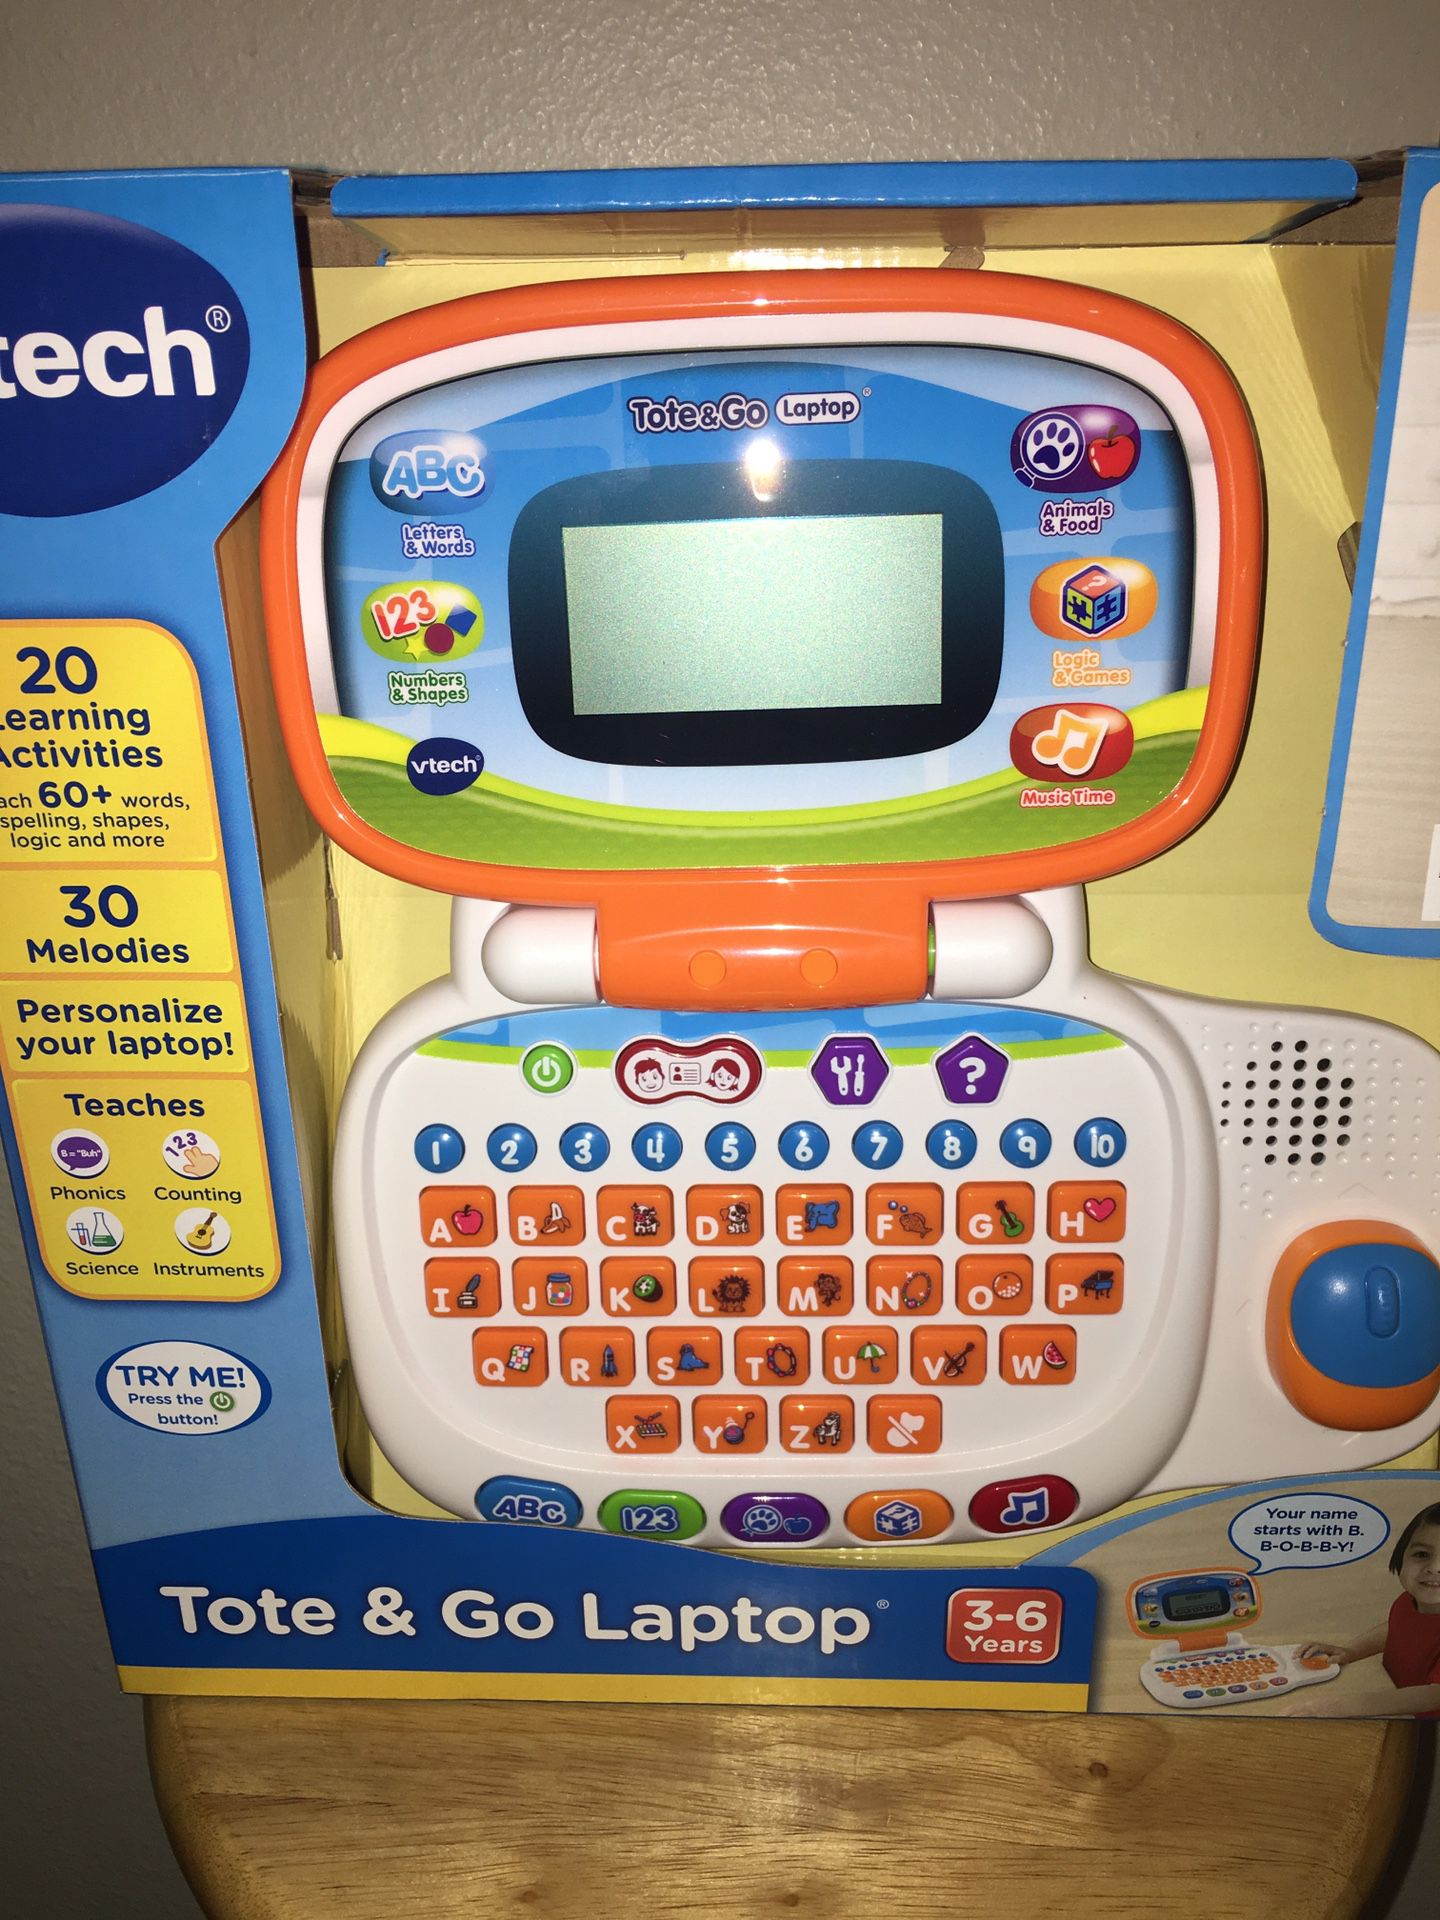 VTech Tote 'N Go Laptop